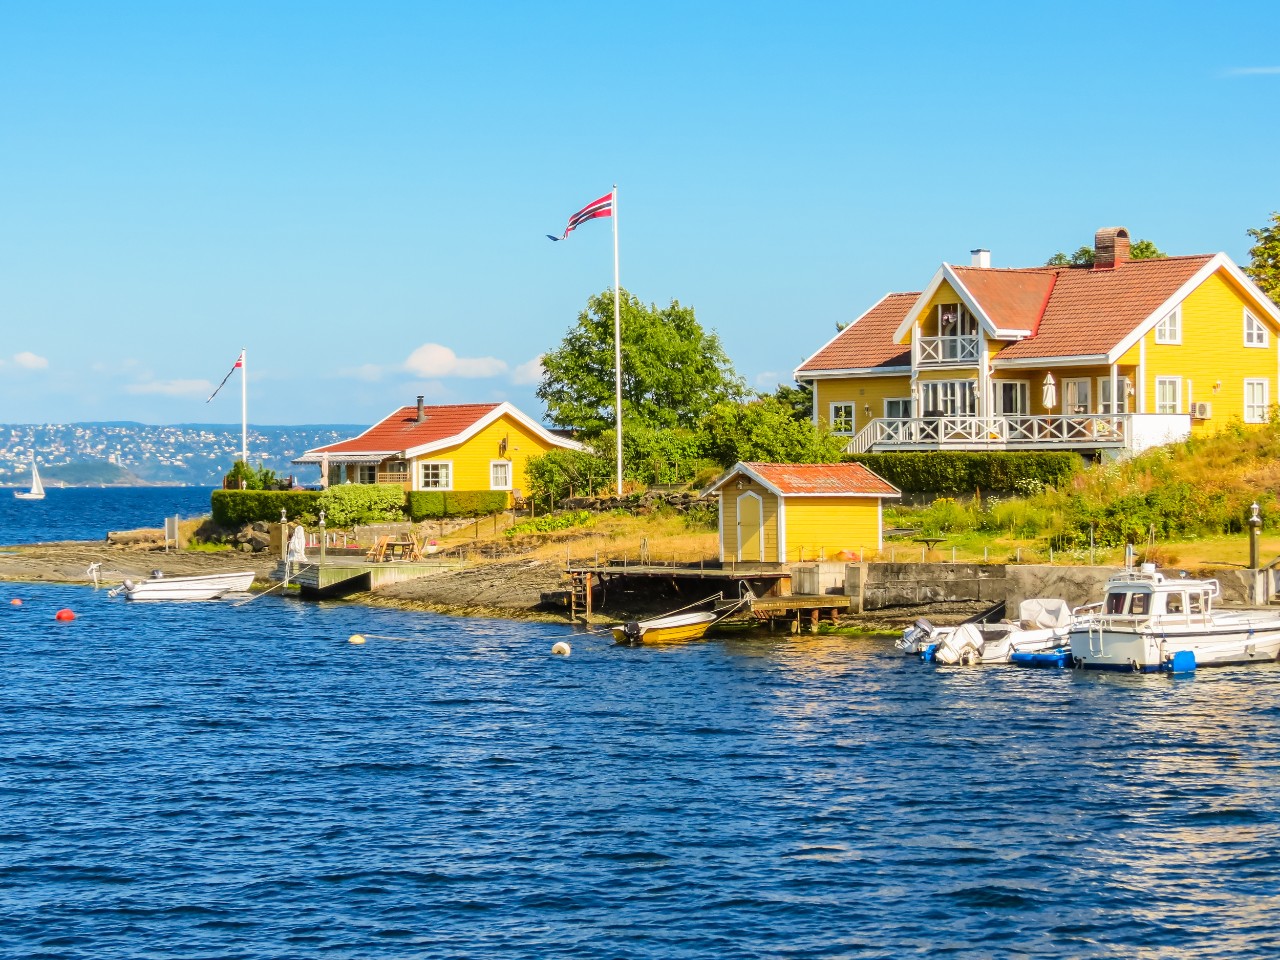 Island in the Oslofjord